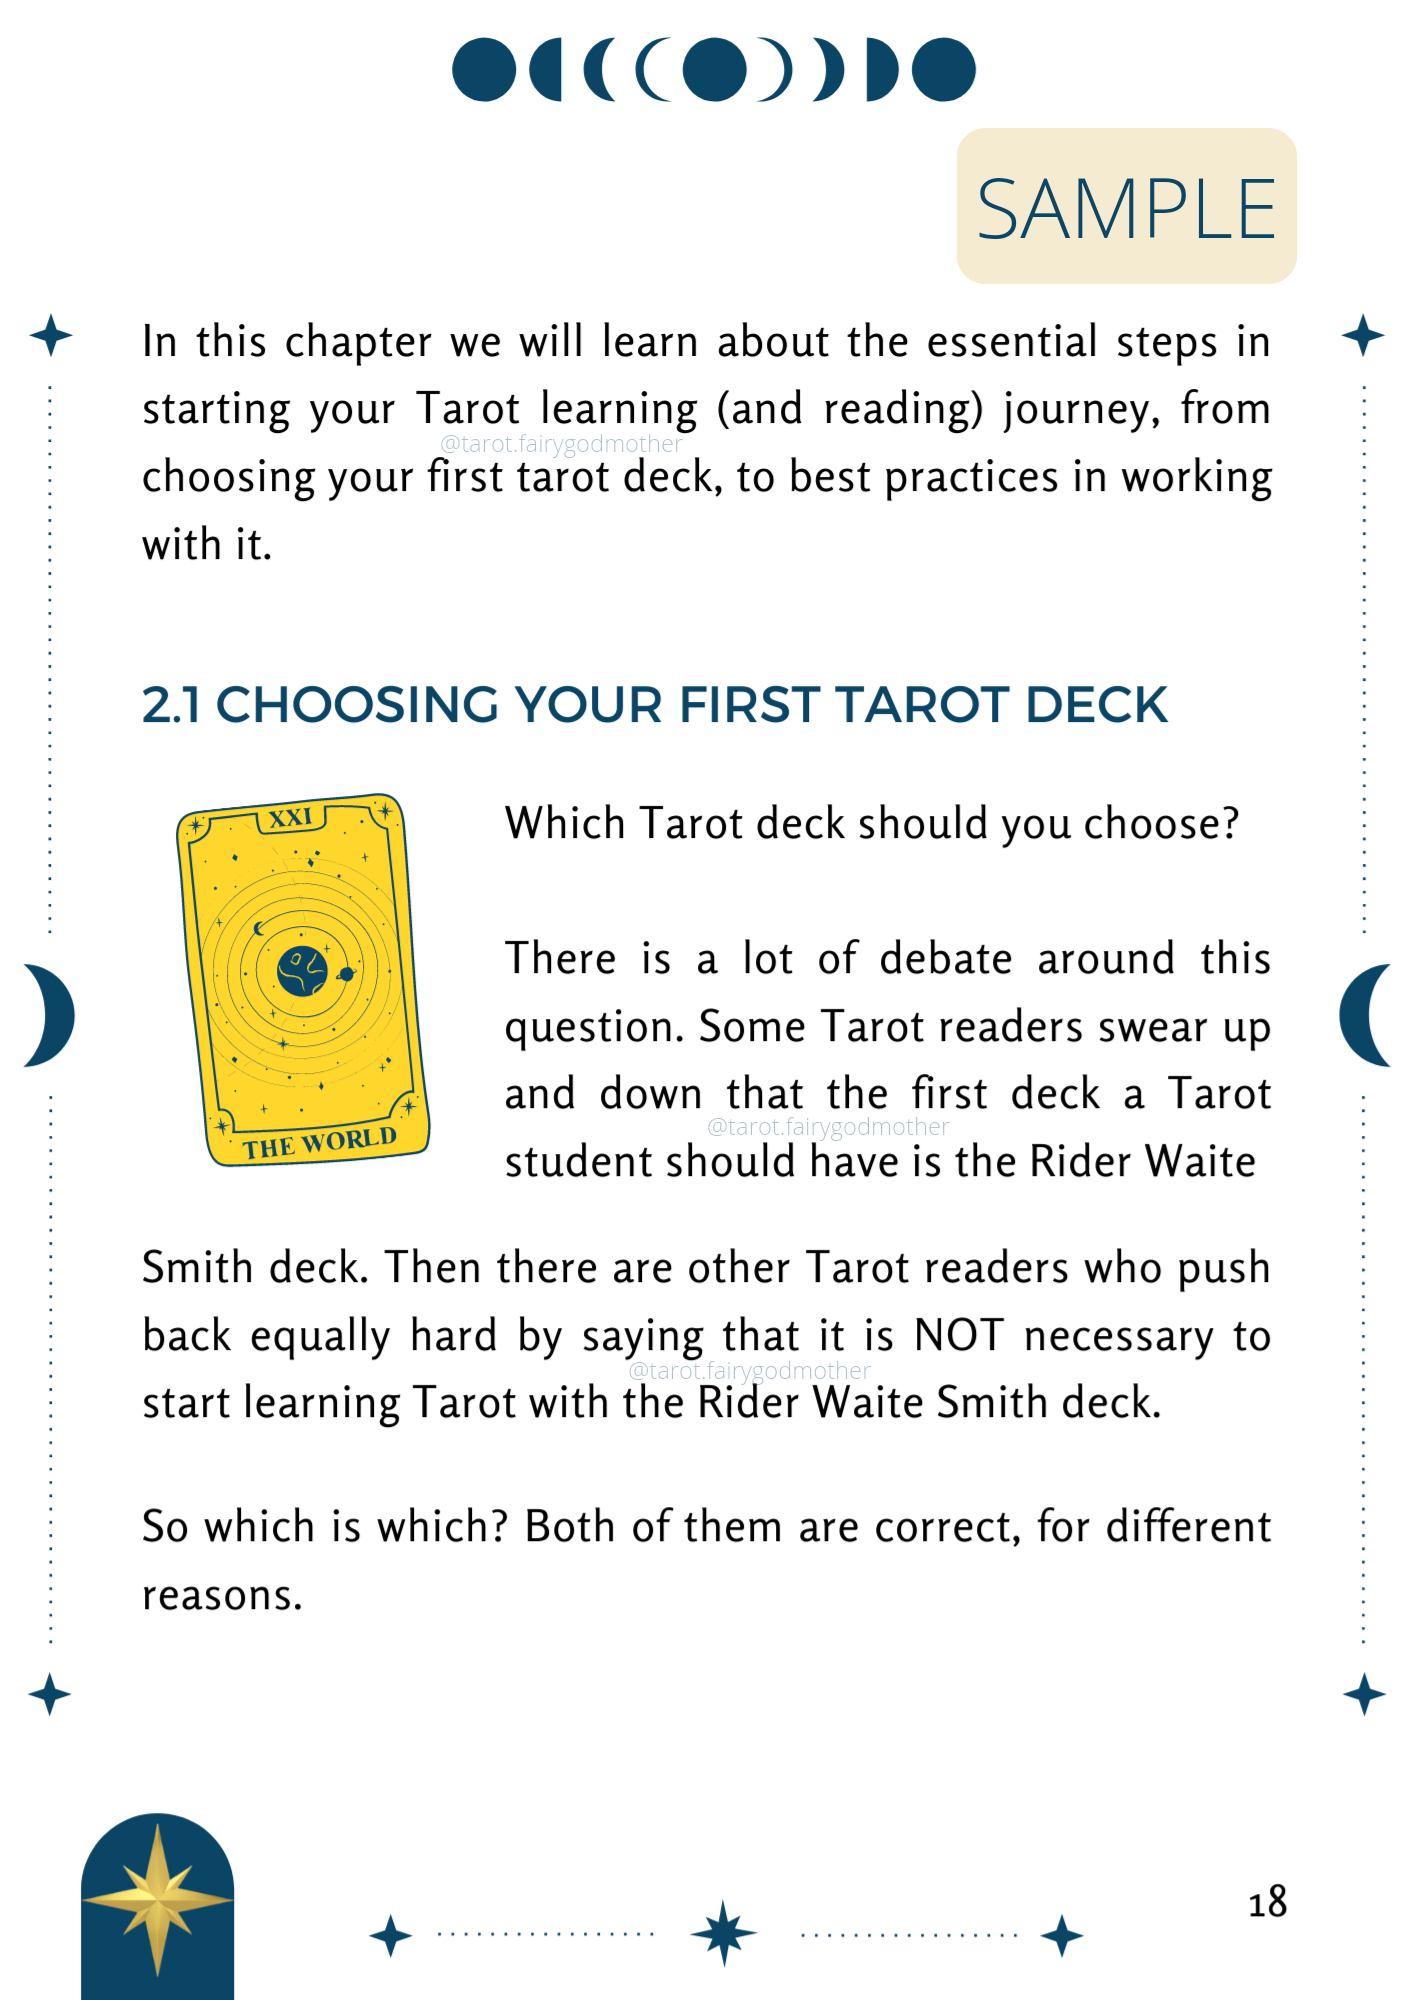 Basic Taromancy - A Smart & Fun Way to Learn Tarot (Ebook + Workbook)